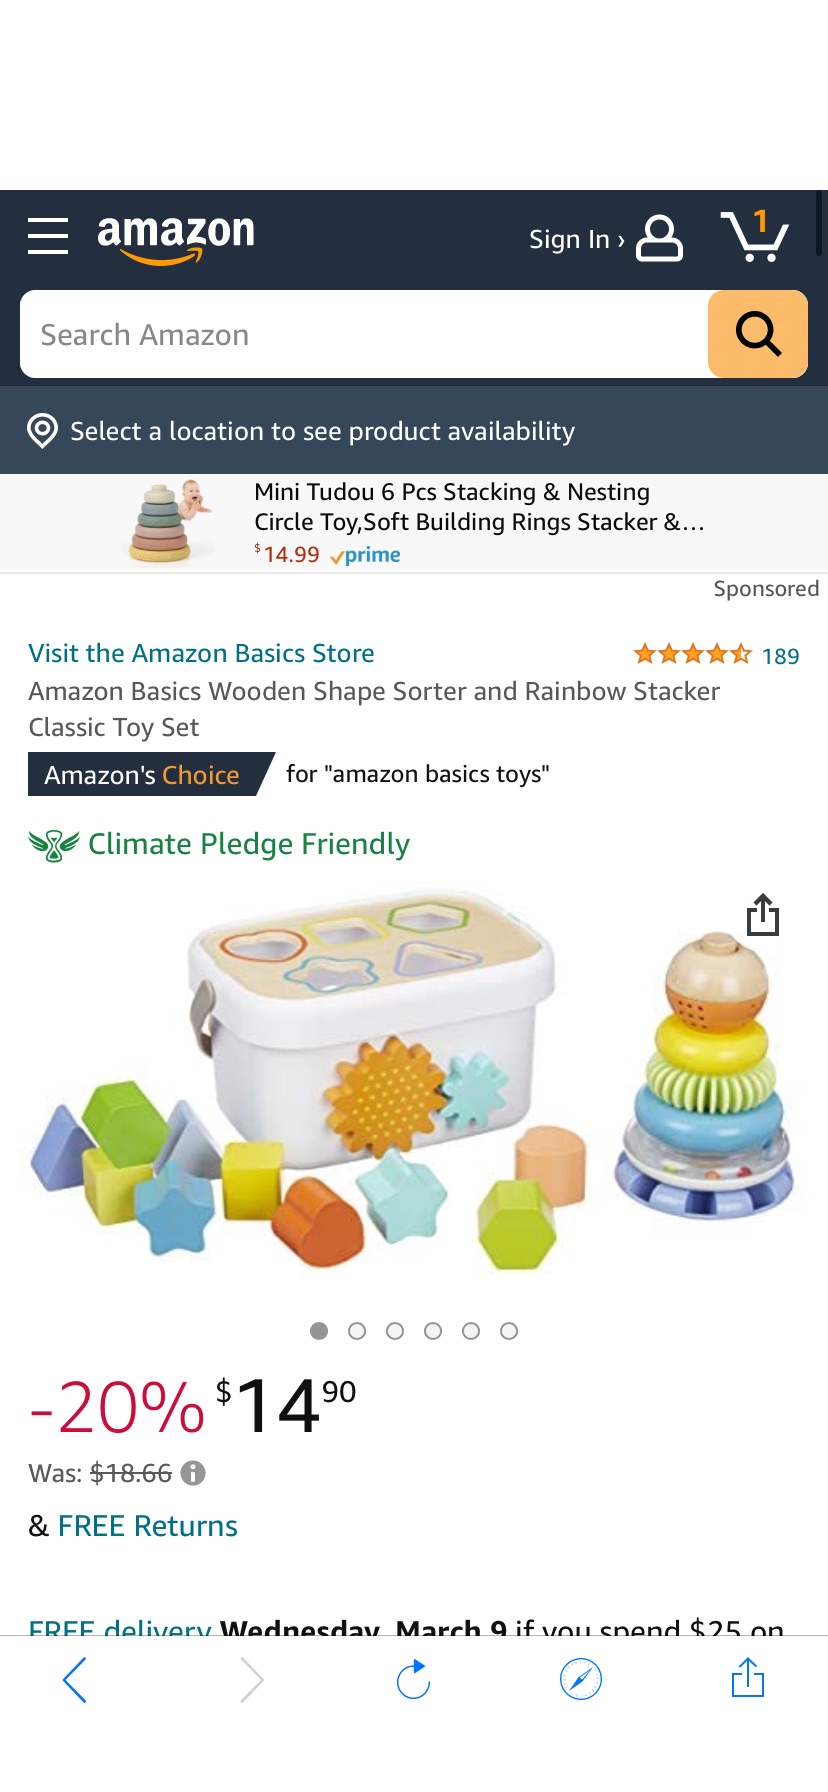 Amazon.com: Amazon Basics Wooden Shape Sorter and Rainbow Stacker Classic Toy Set : Toys & Games་儿童手部精细锻炼玩具  认识图形